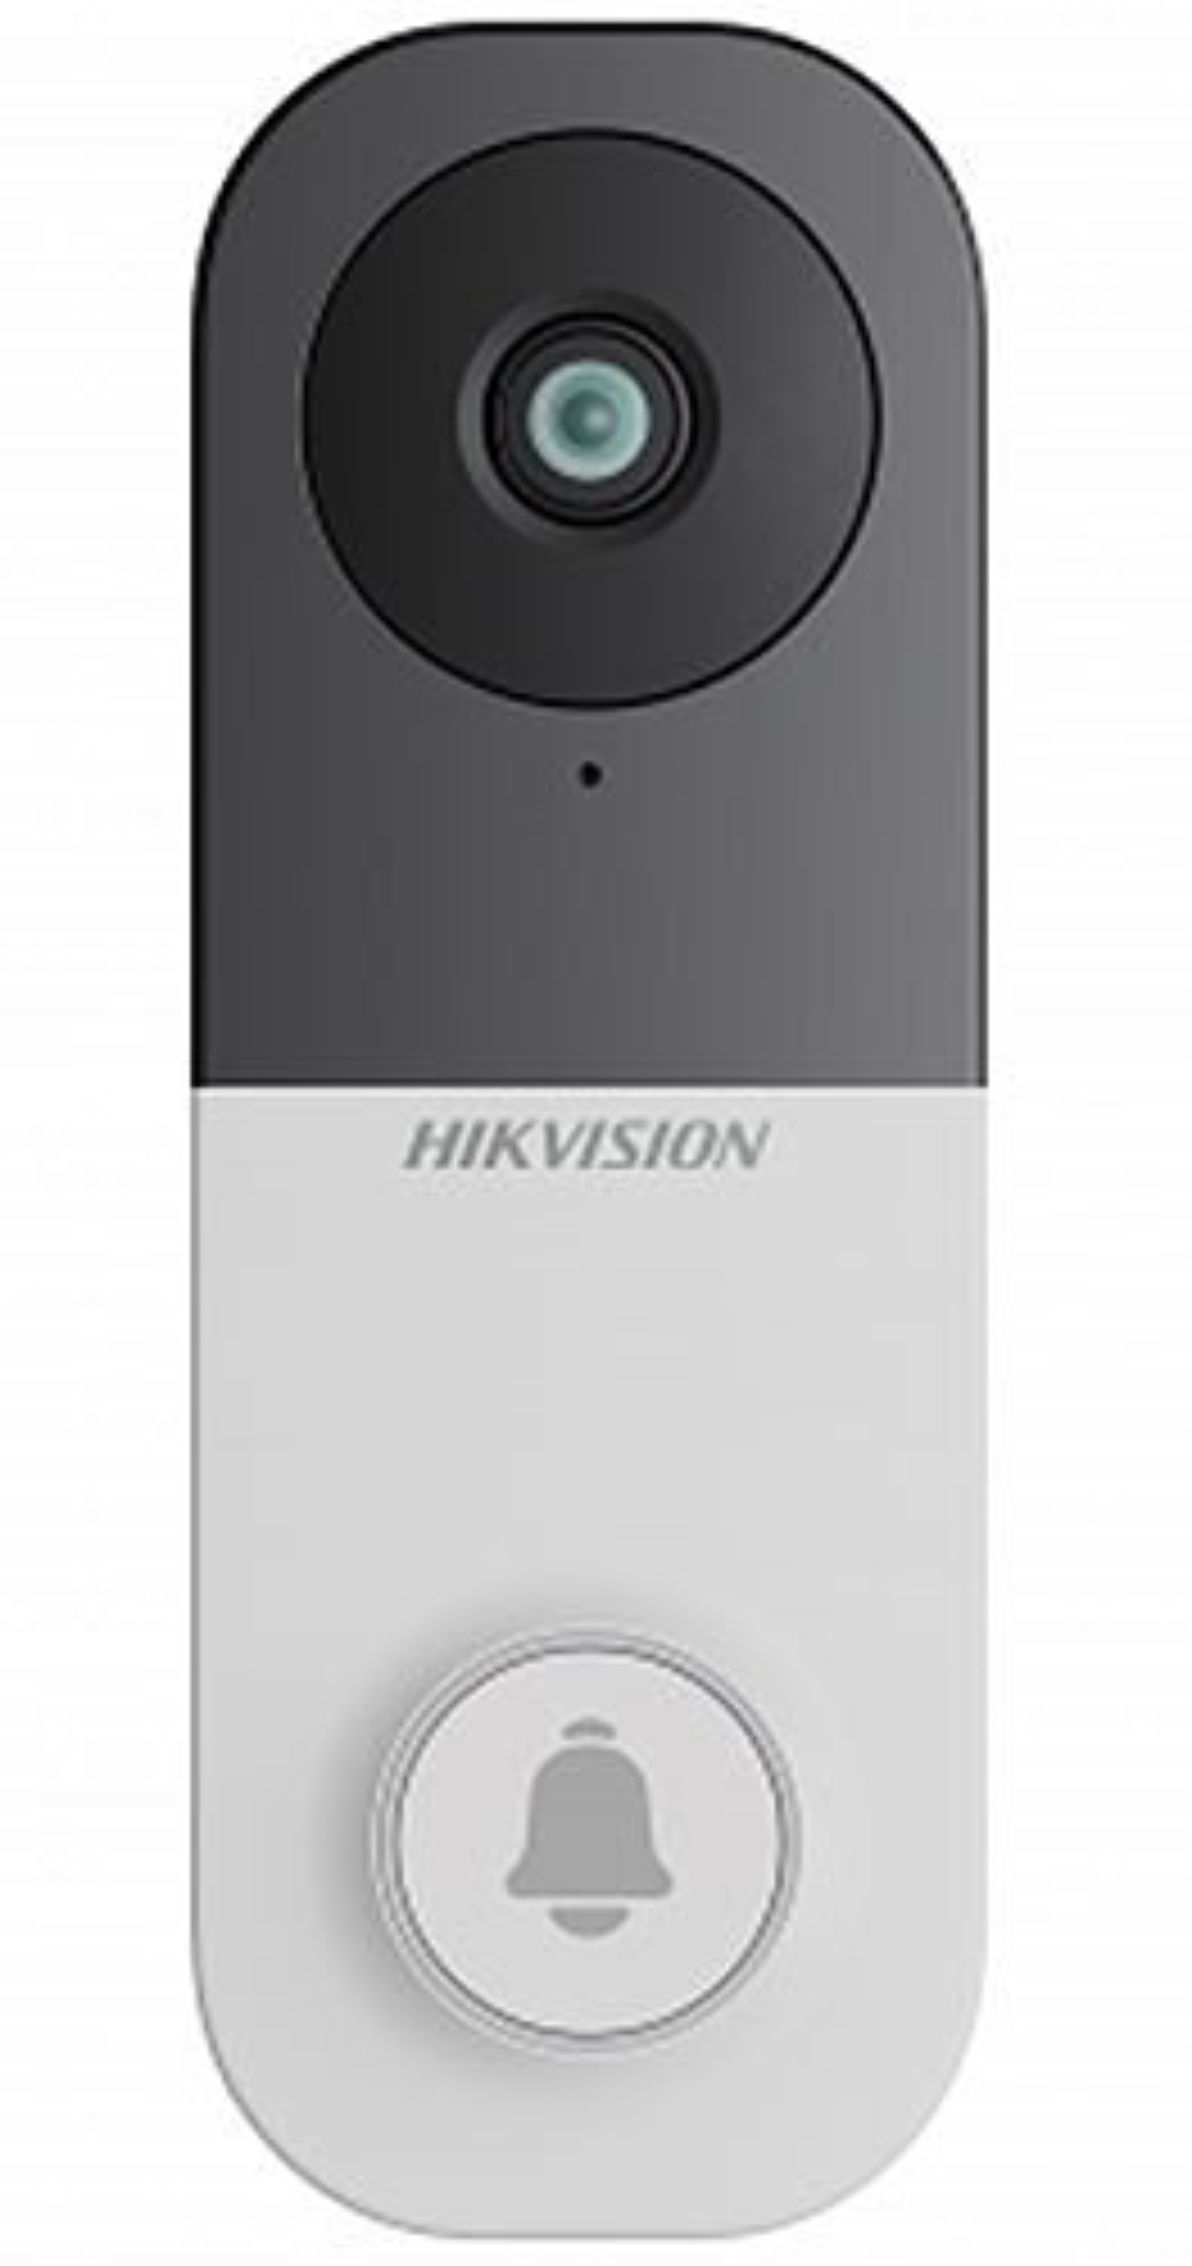 Дверной звонок Hikvision Wi-Fi Smart 